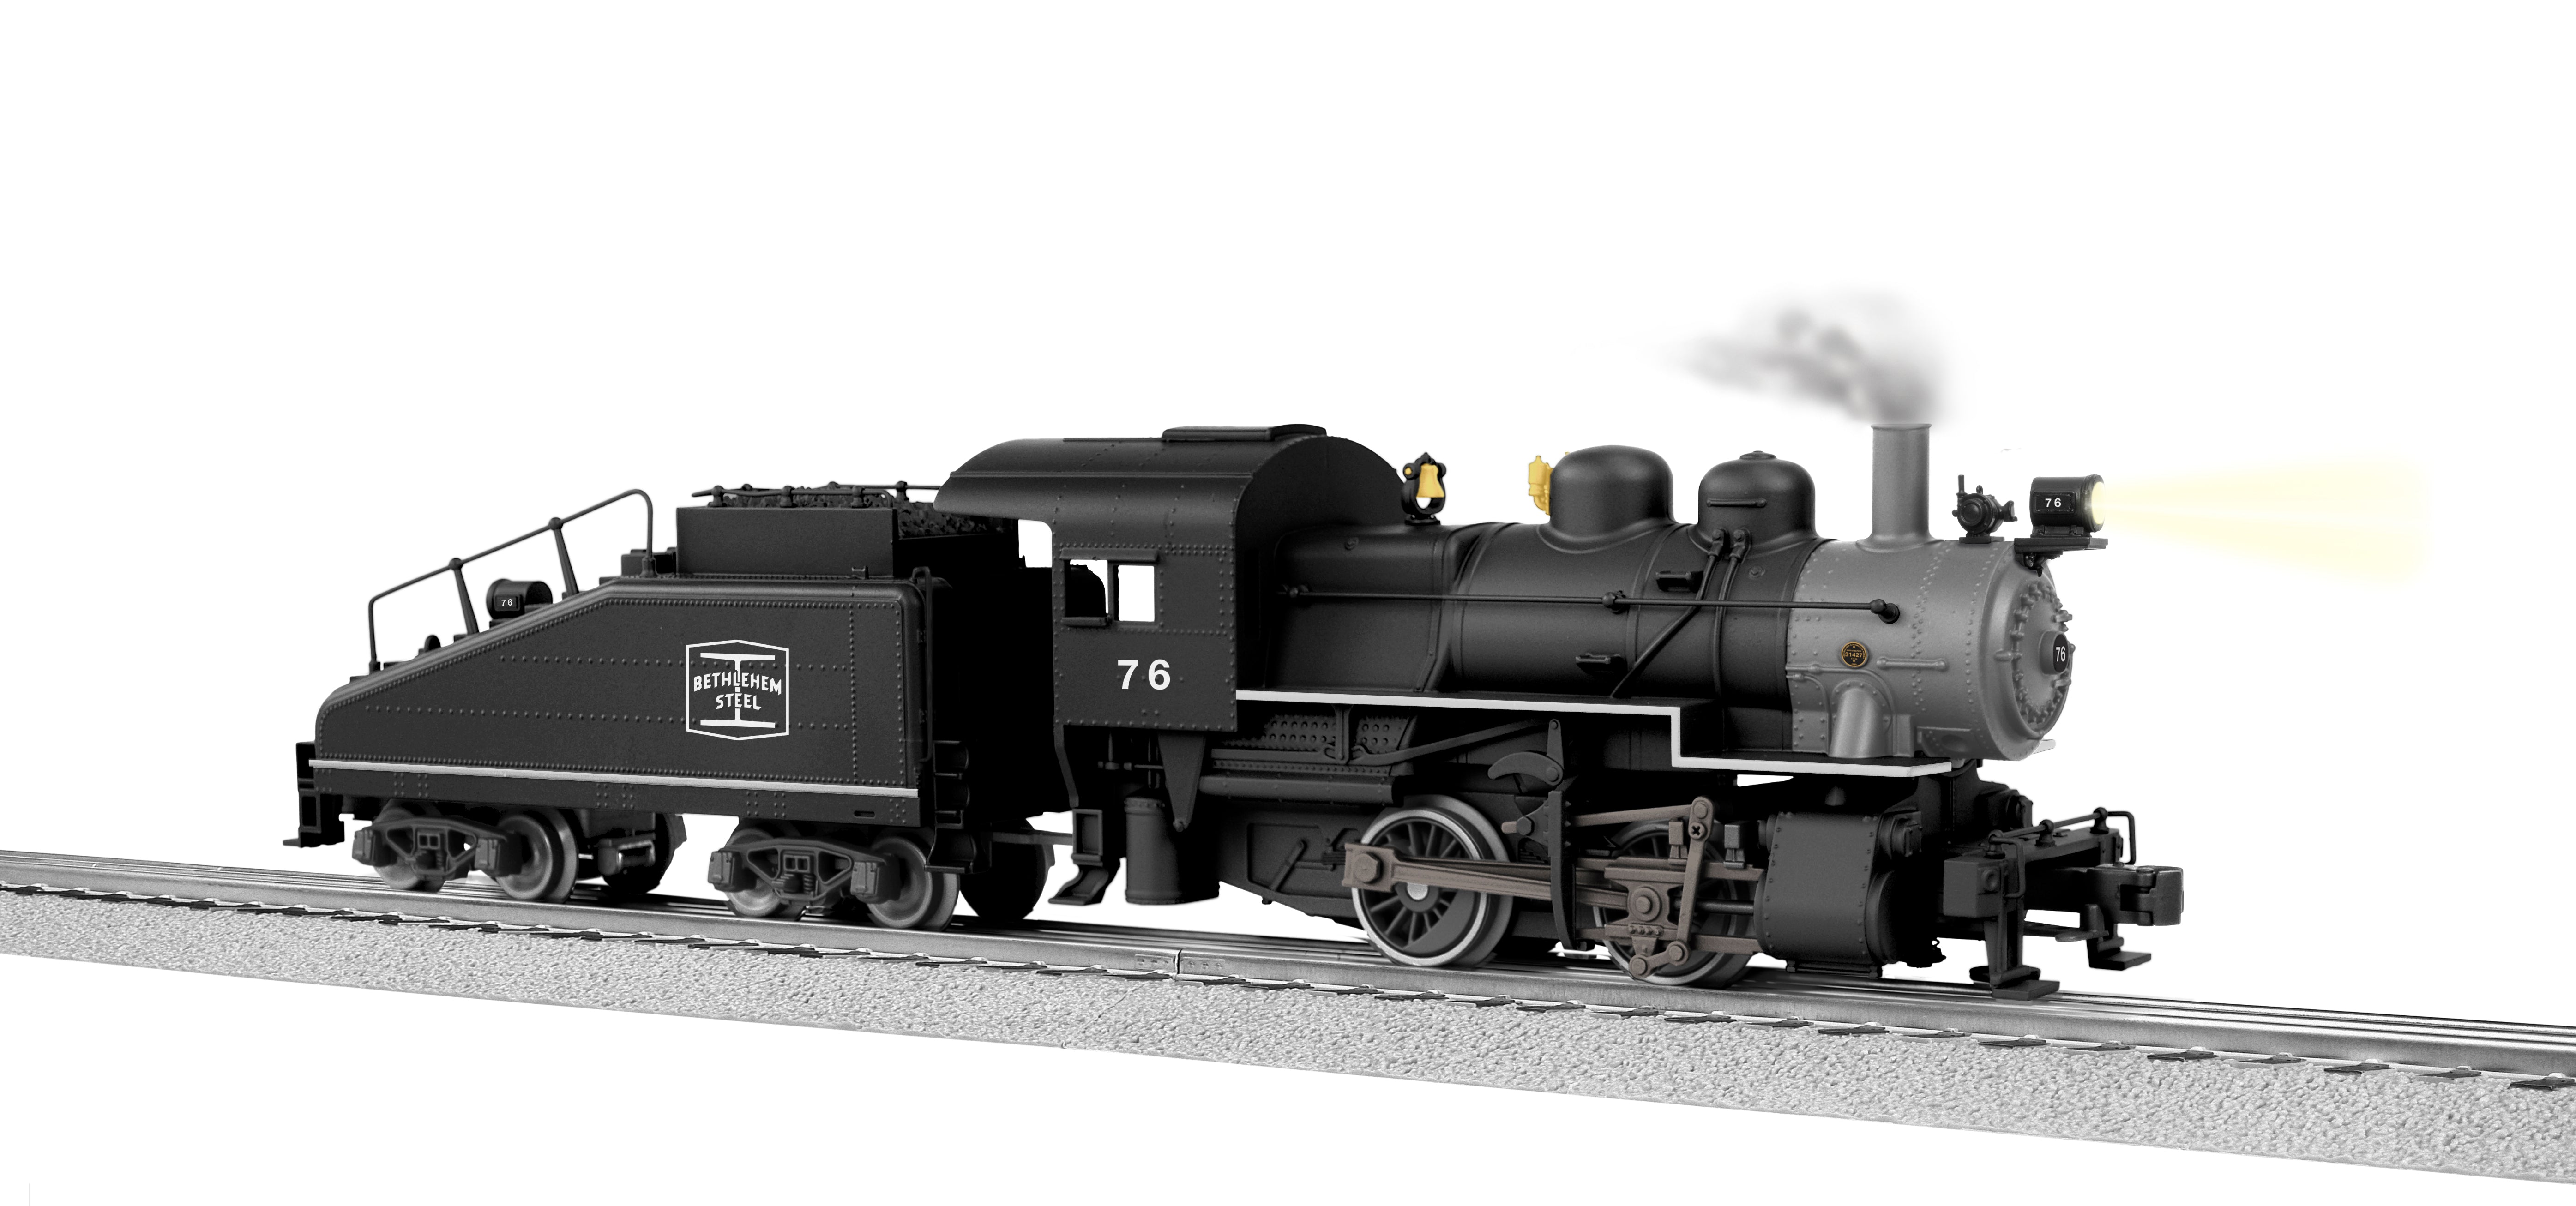 Lionel 2232050 - Legacy 0-4-0 Steam Locomotive "Bethlehem Steel" #111